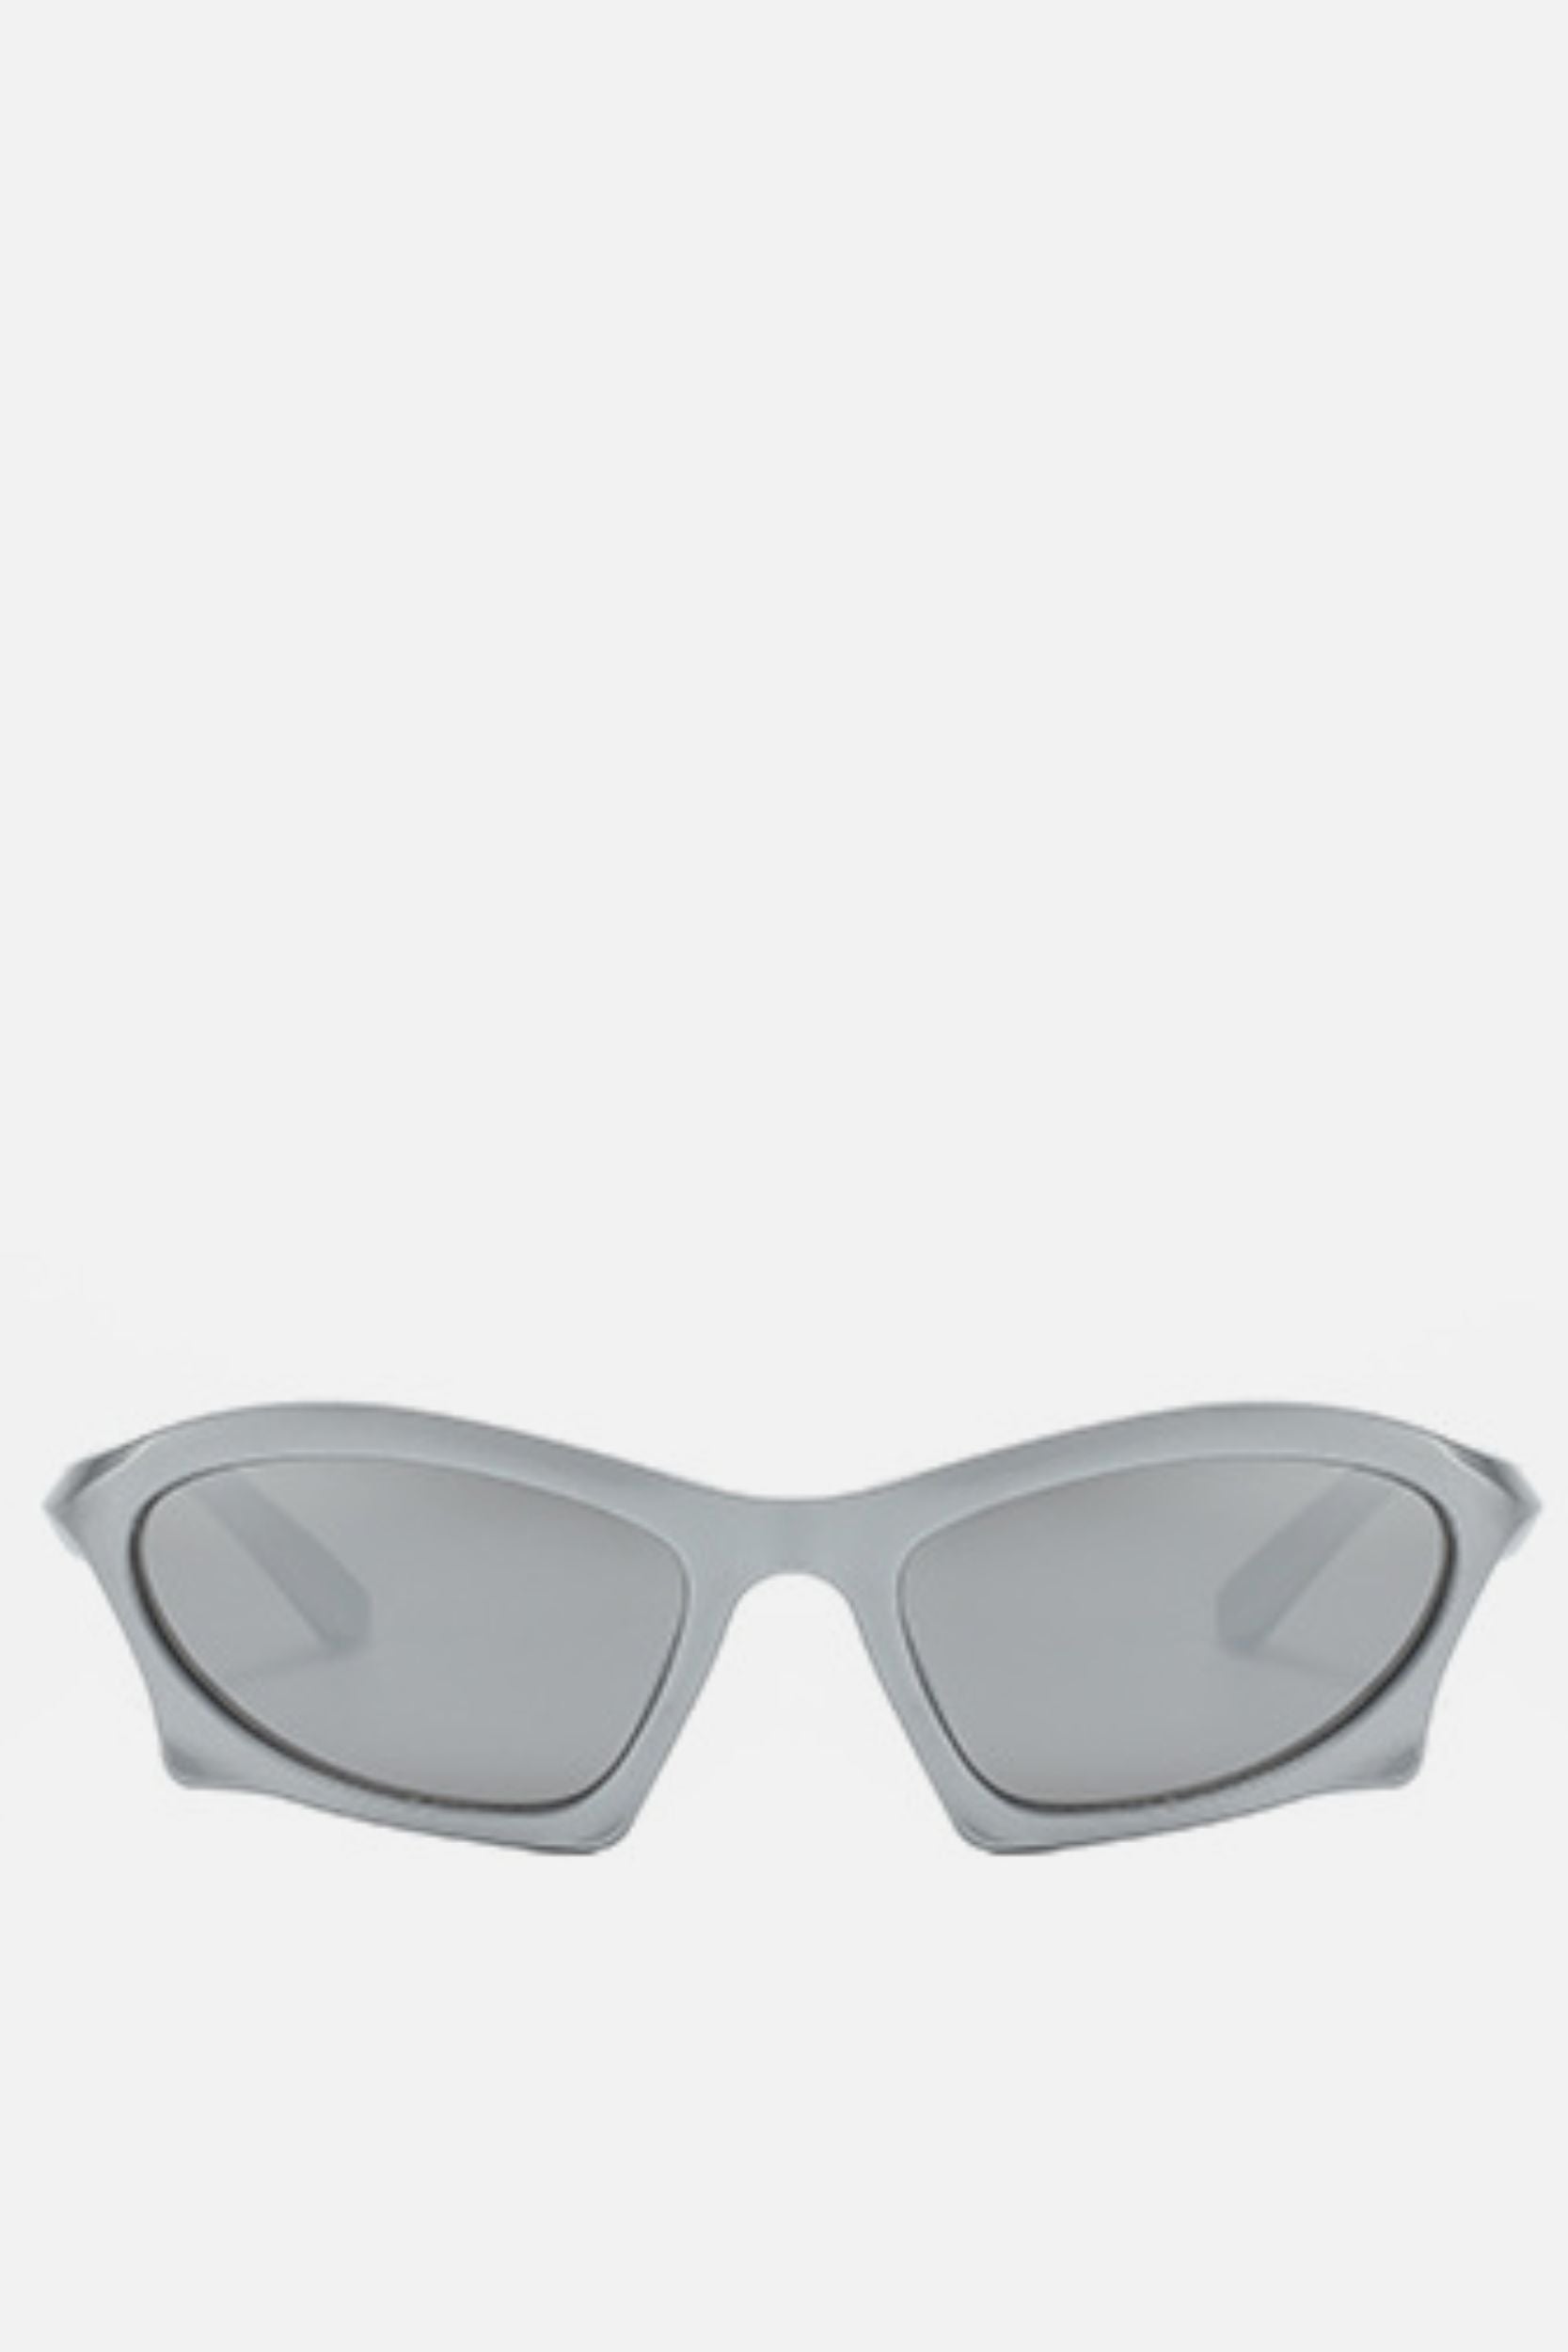 CALI Silver Cat Eye Sunglasses